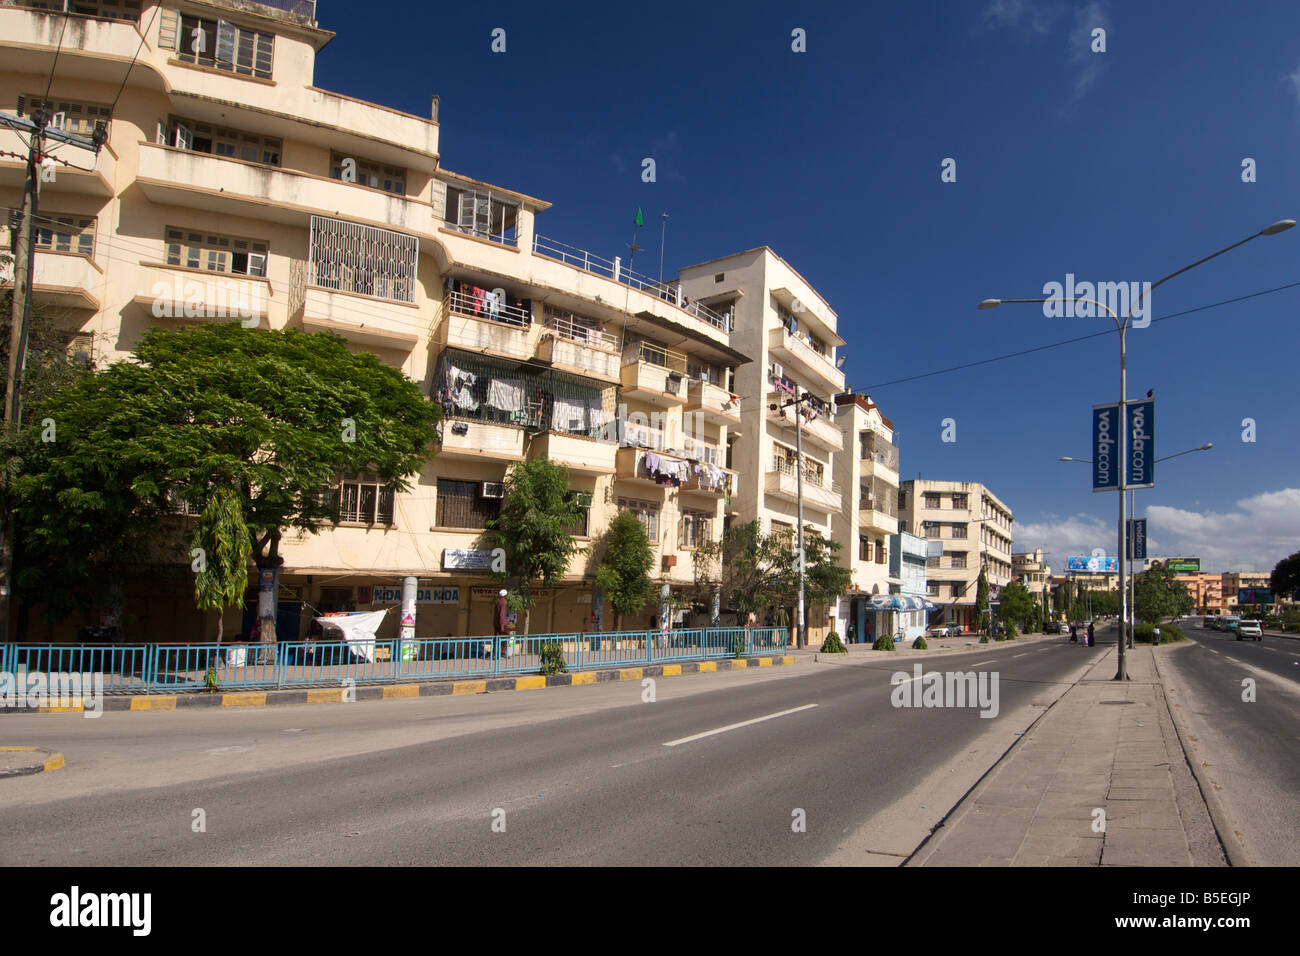 Junction of Bibi Titi Mohammed road and Uhuru road in Dar es Salaam, the capital of Tanzania. Stock Photo